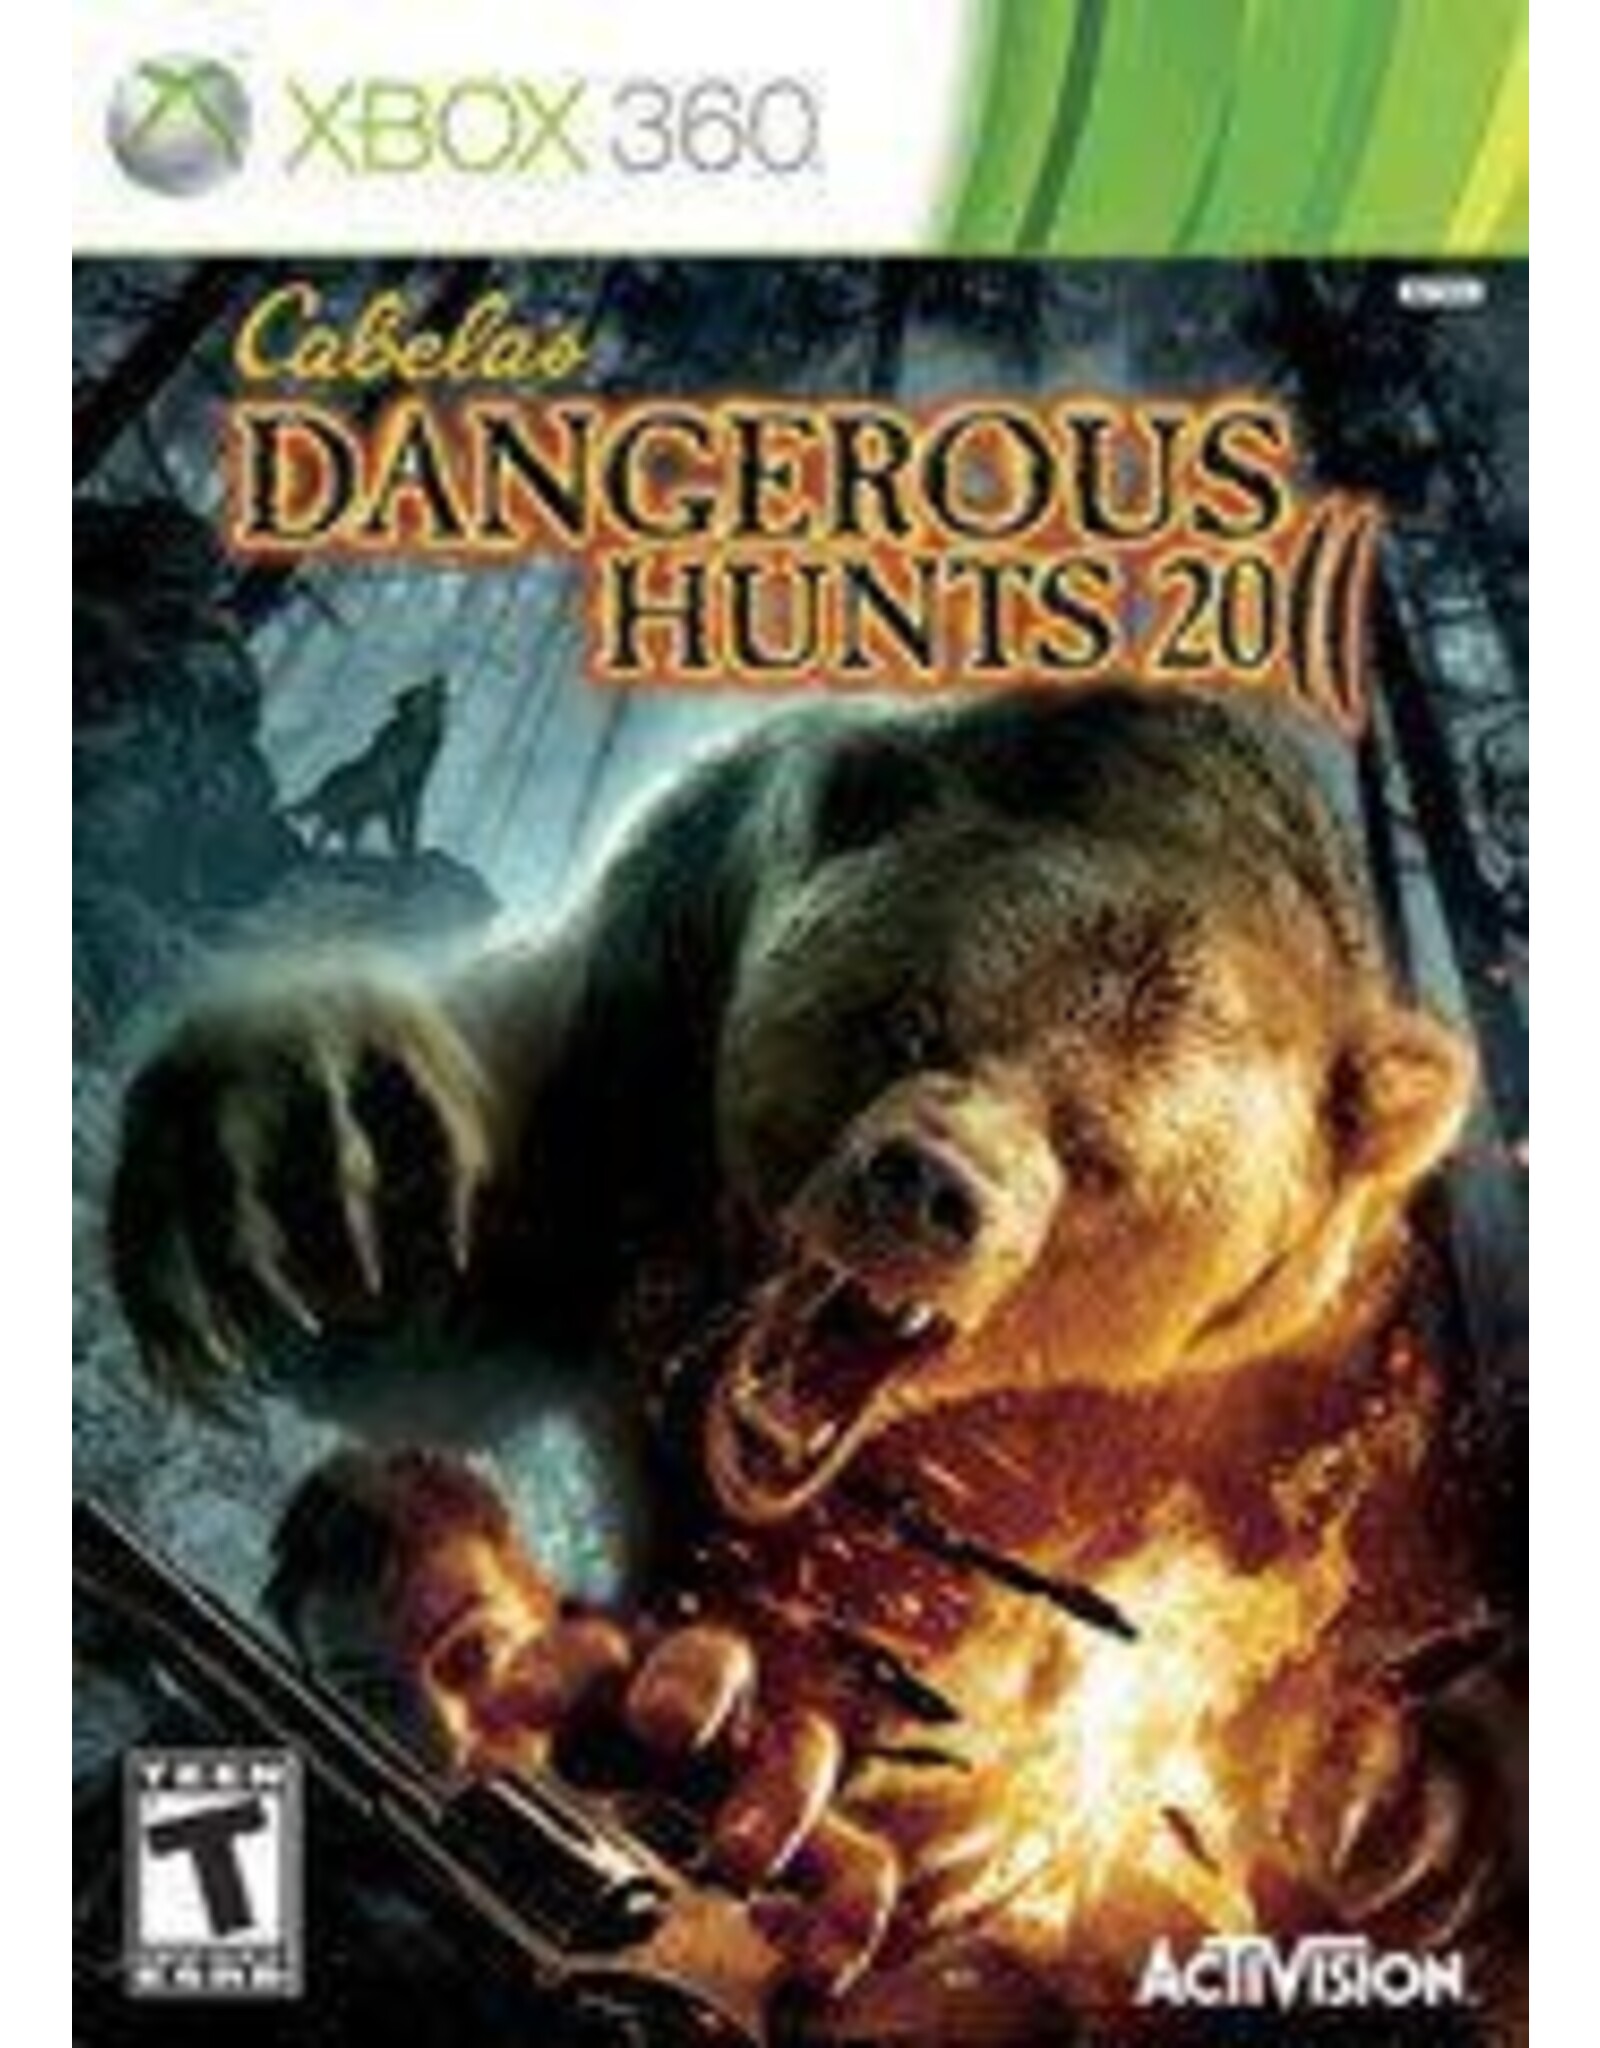 Xbox 360 Cabela's Dangerous Hunts 2011 (Used)